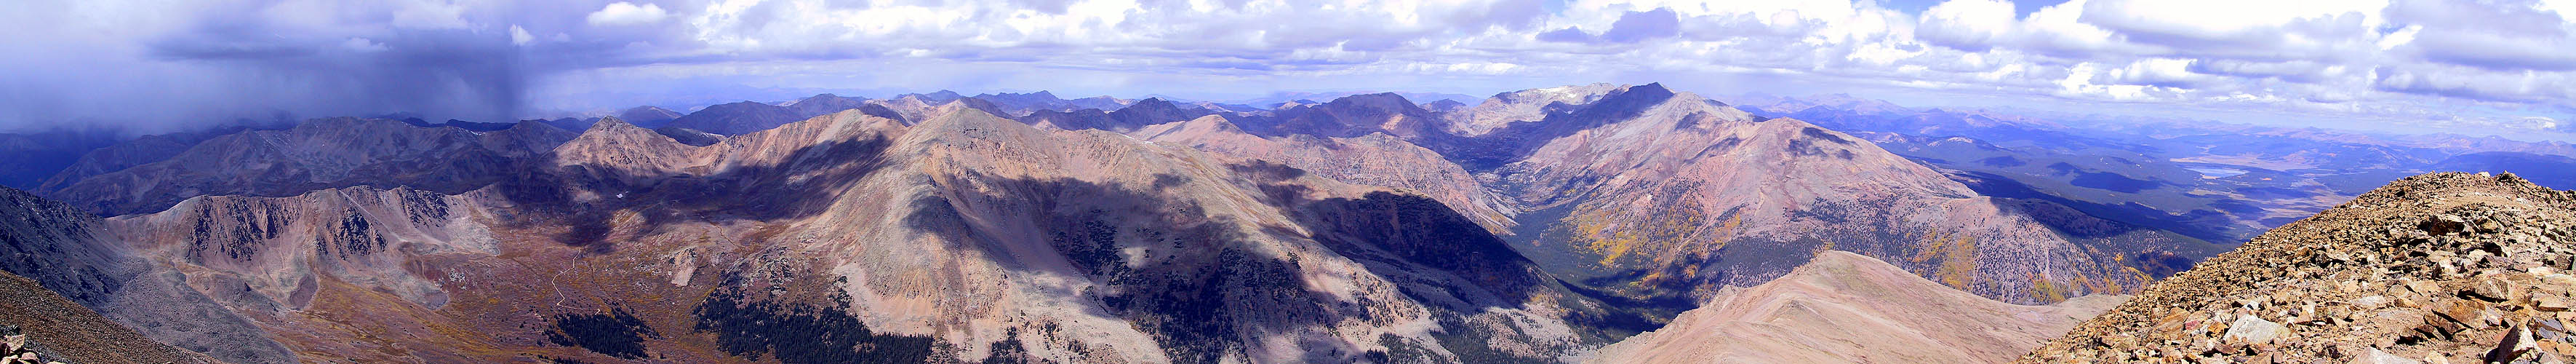 Mt Elbert 2001: Summit Panoramic North